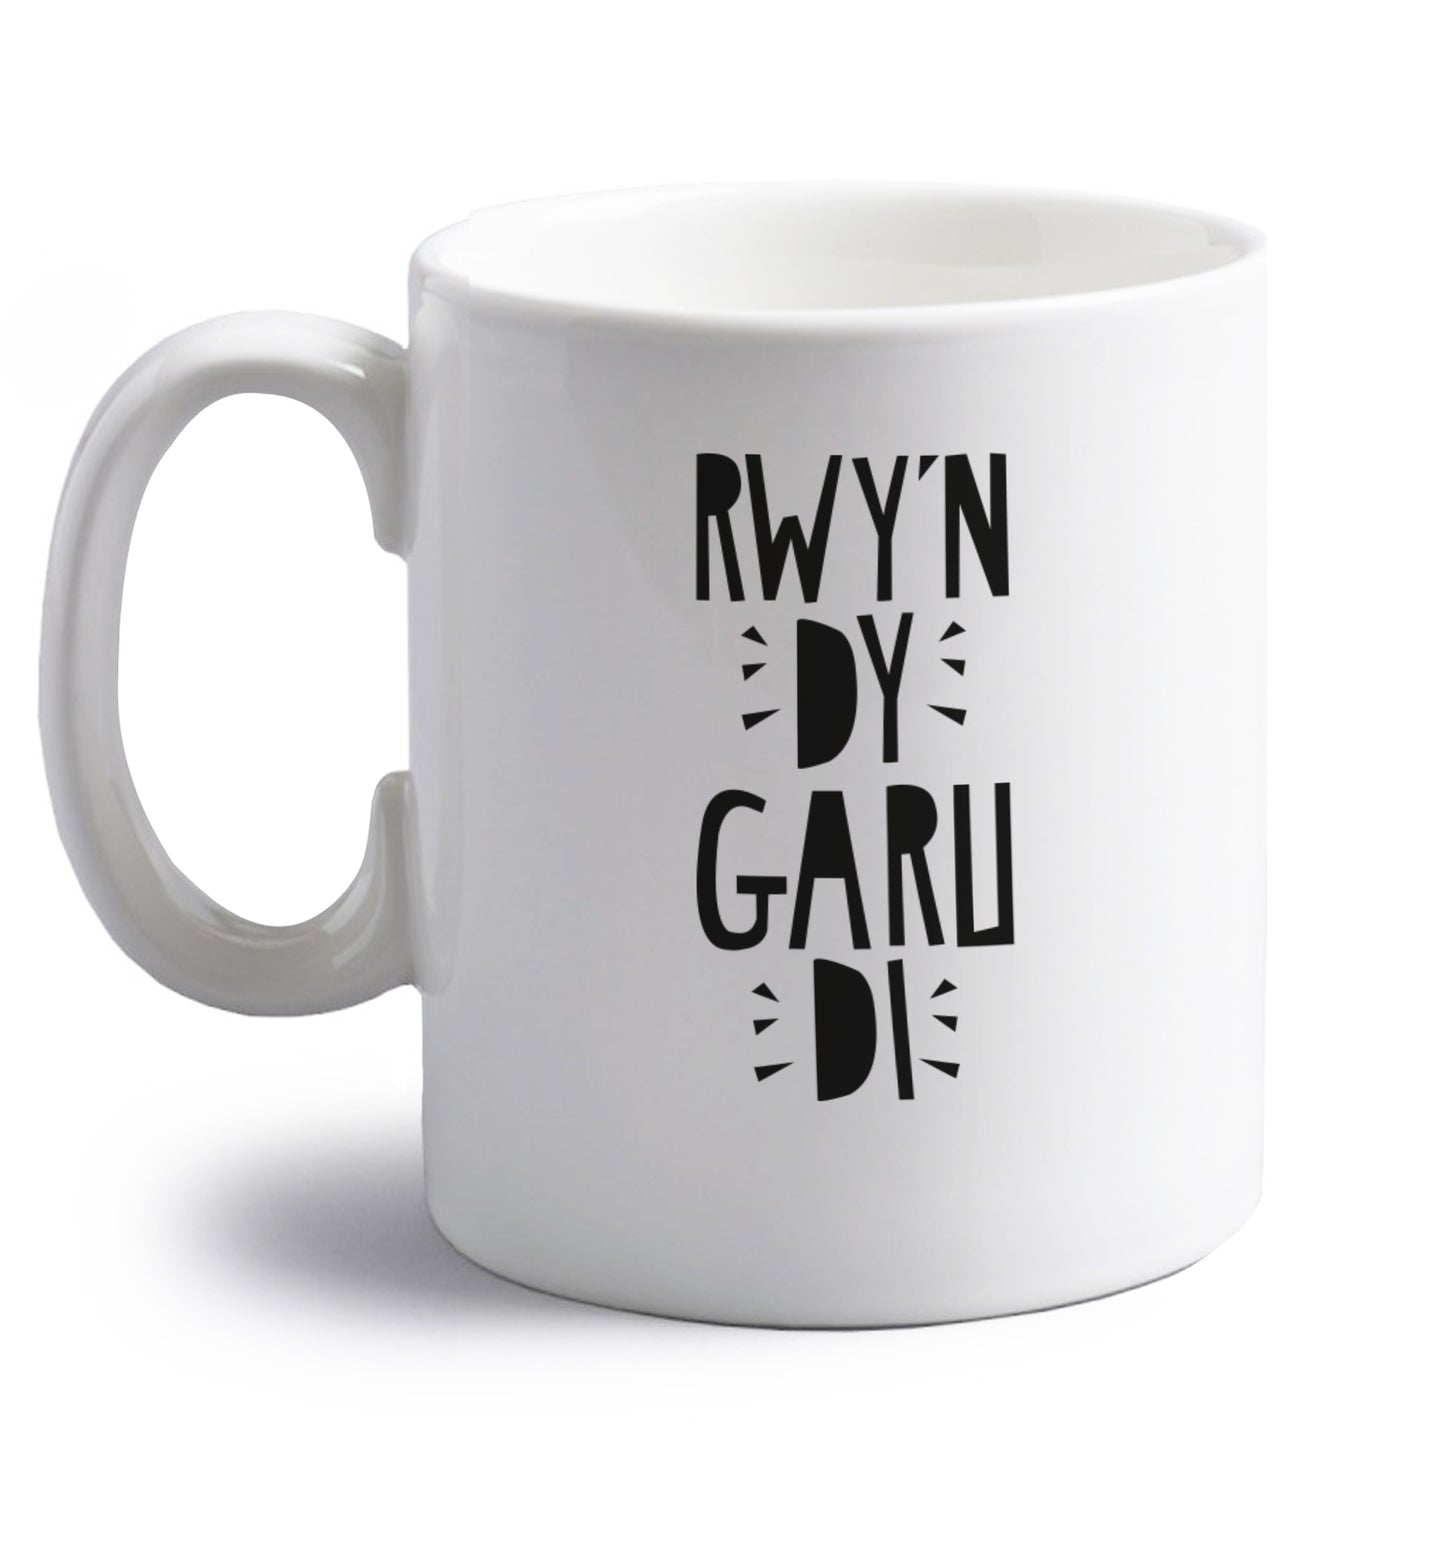 Rwy'n dy garu di - I love you right handed white ceramic mug 